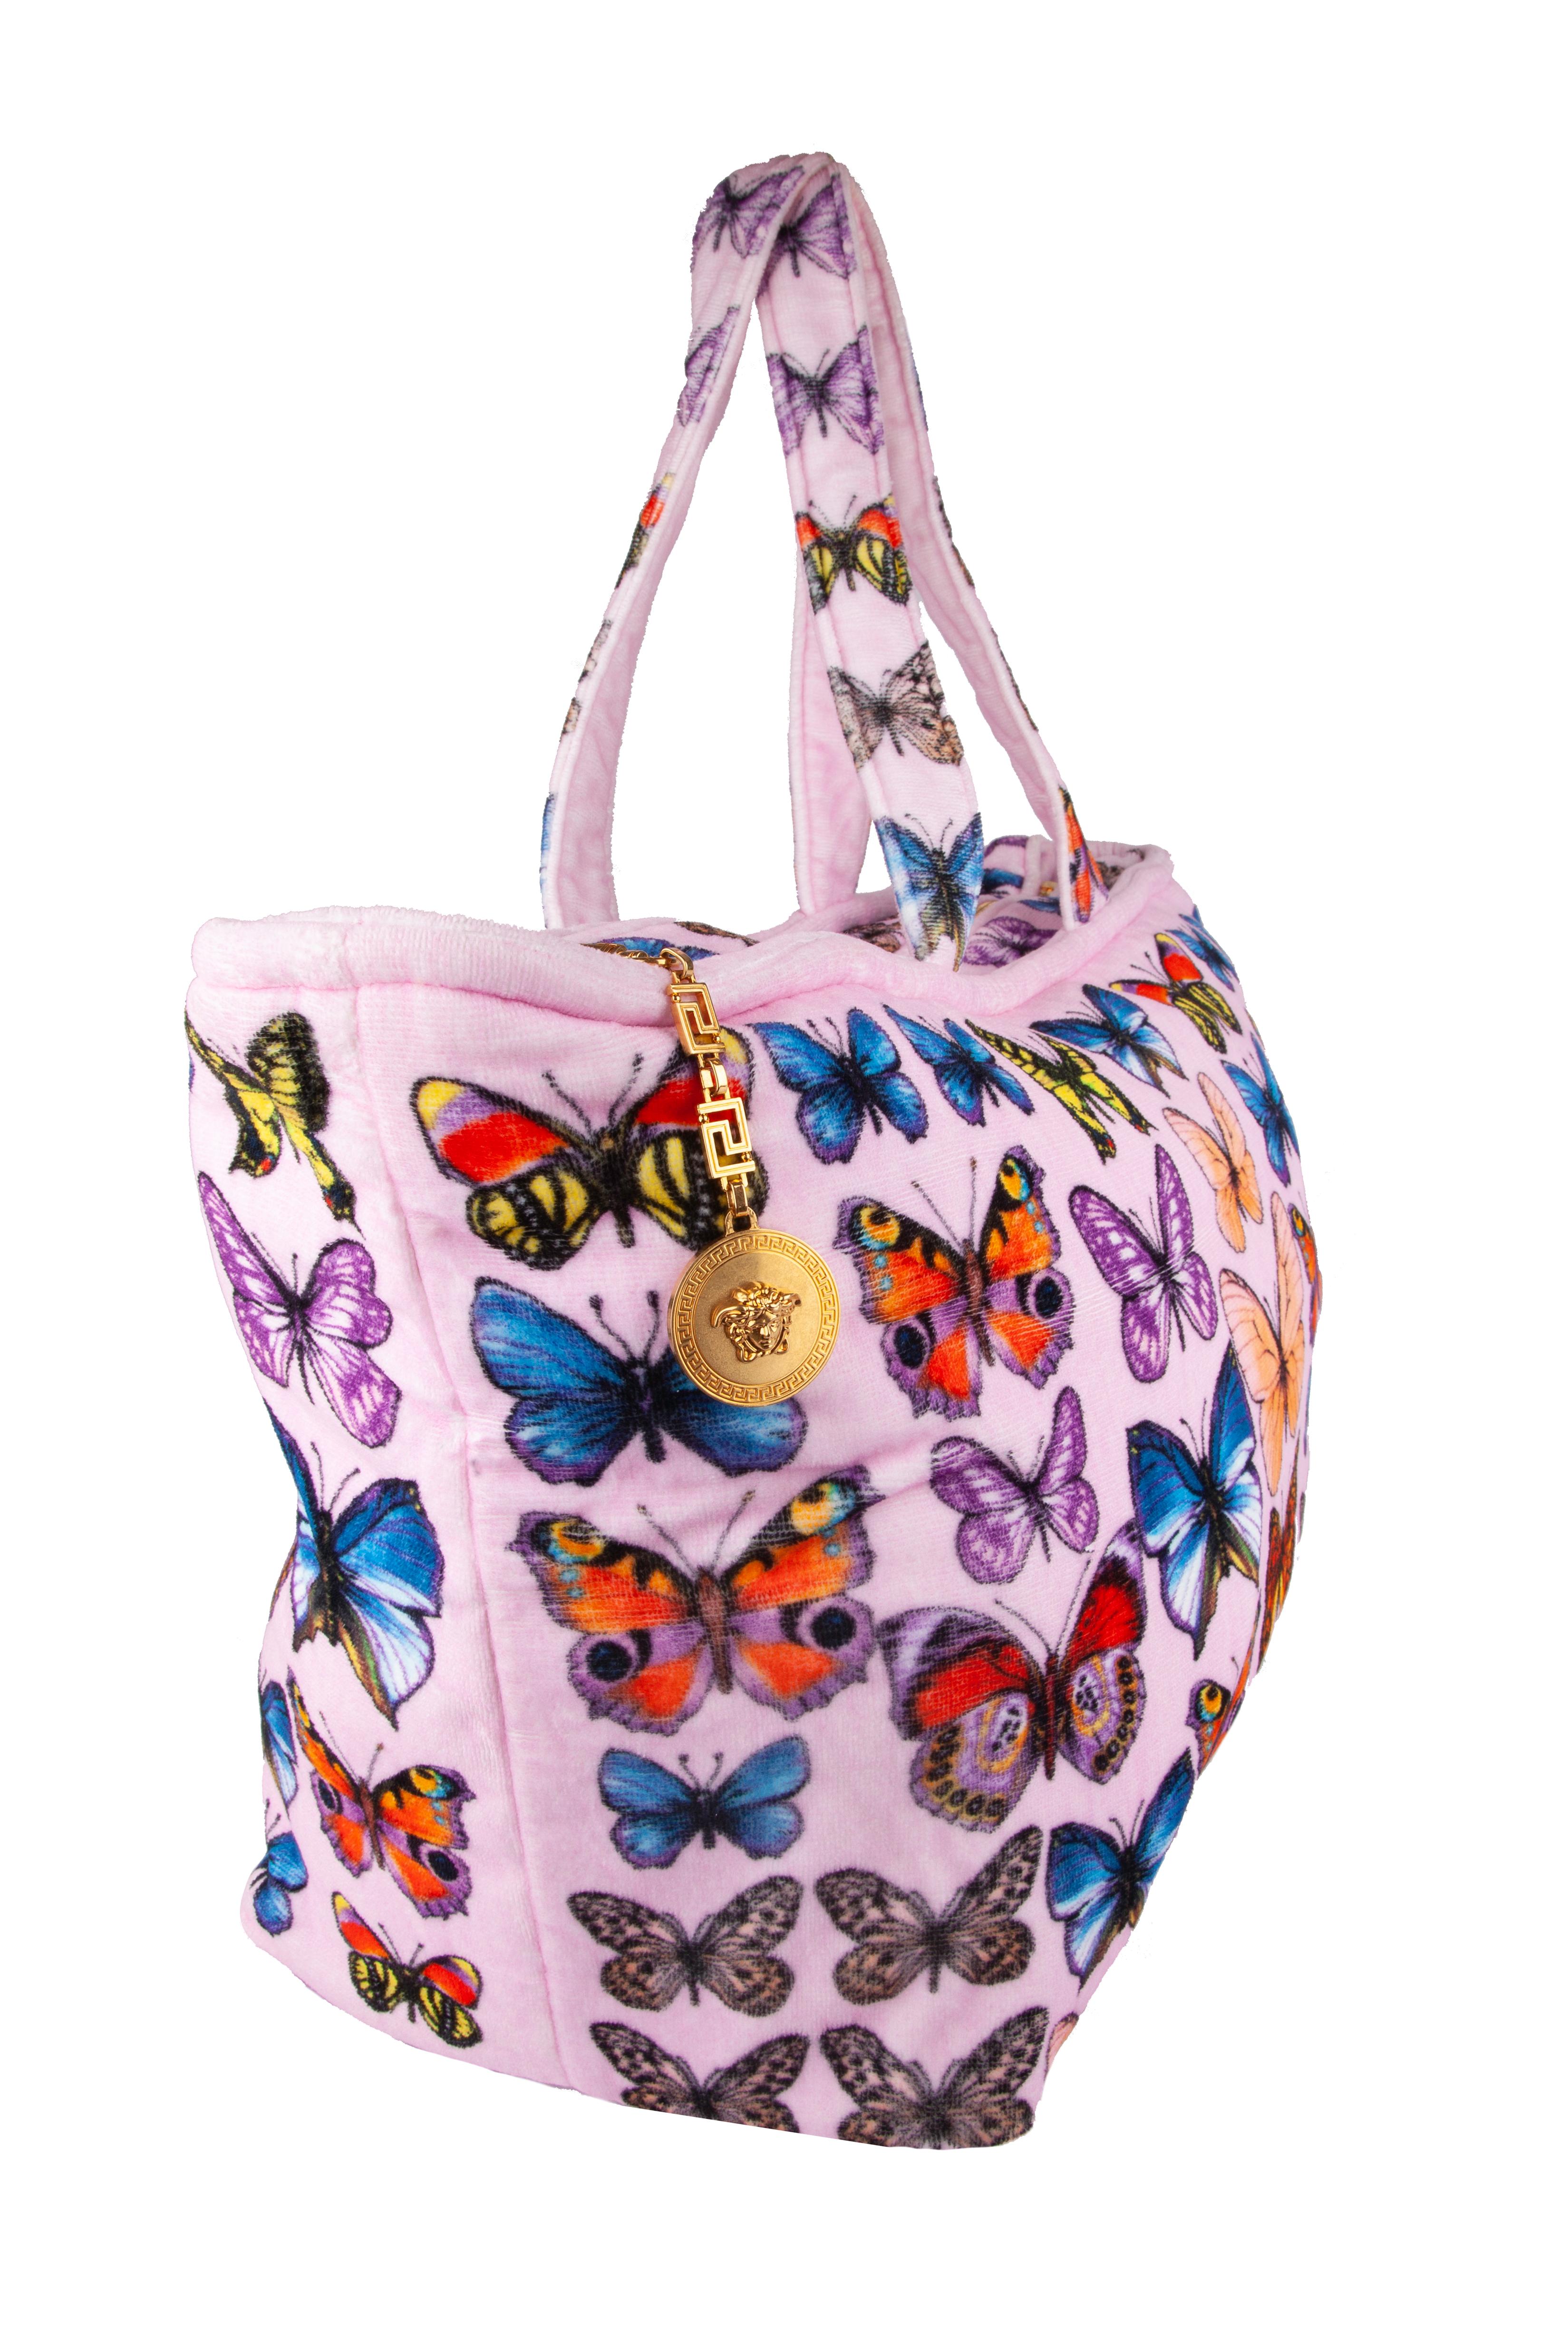 versace butterfly bag